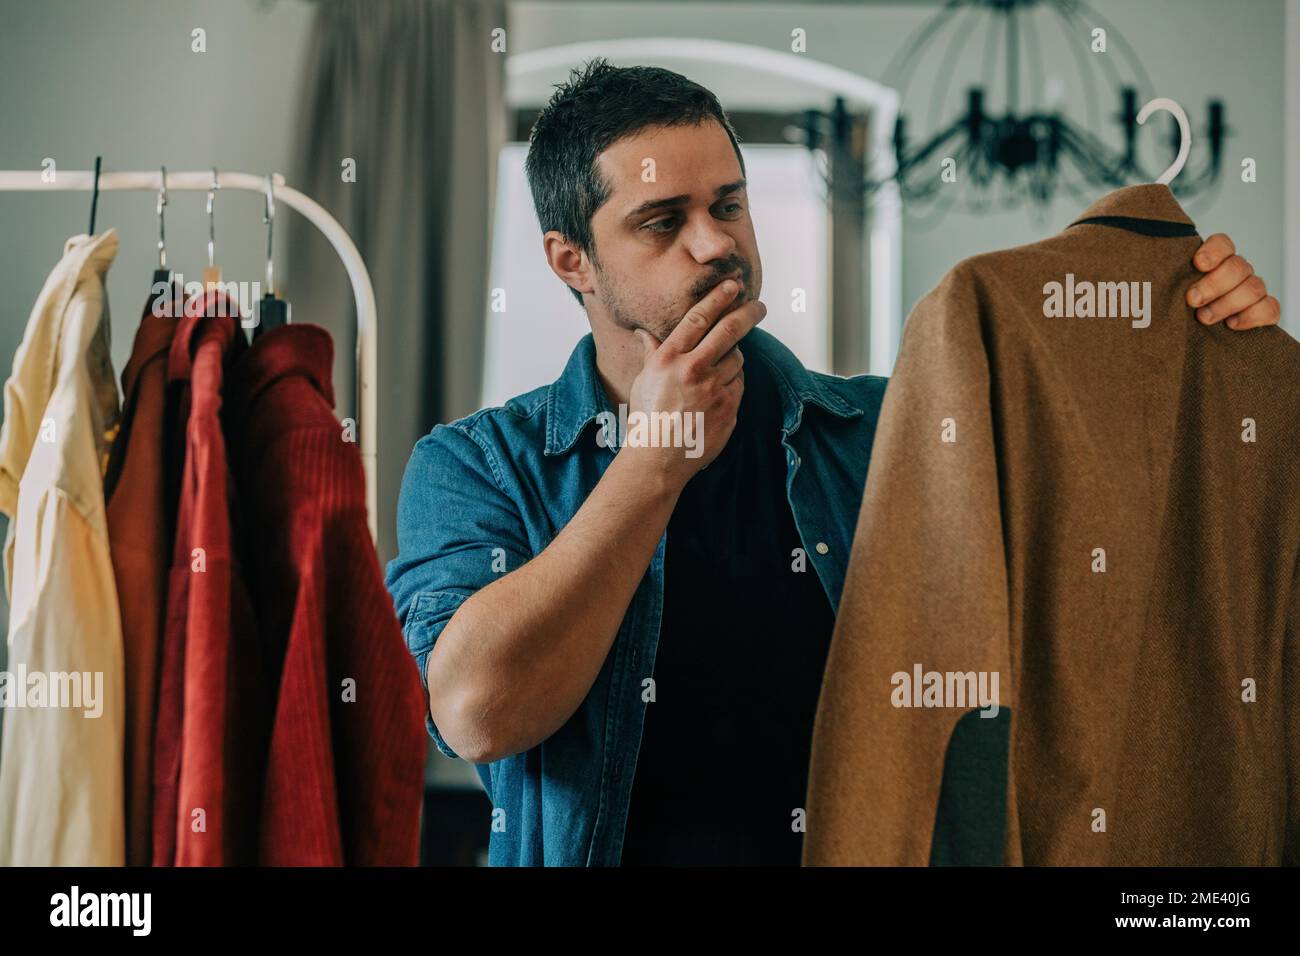 Man choosing clothes at home Stock Photo